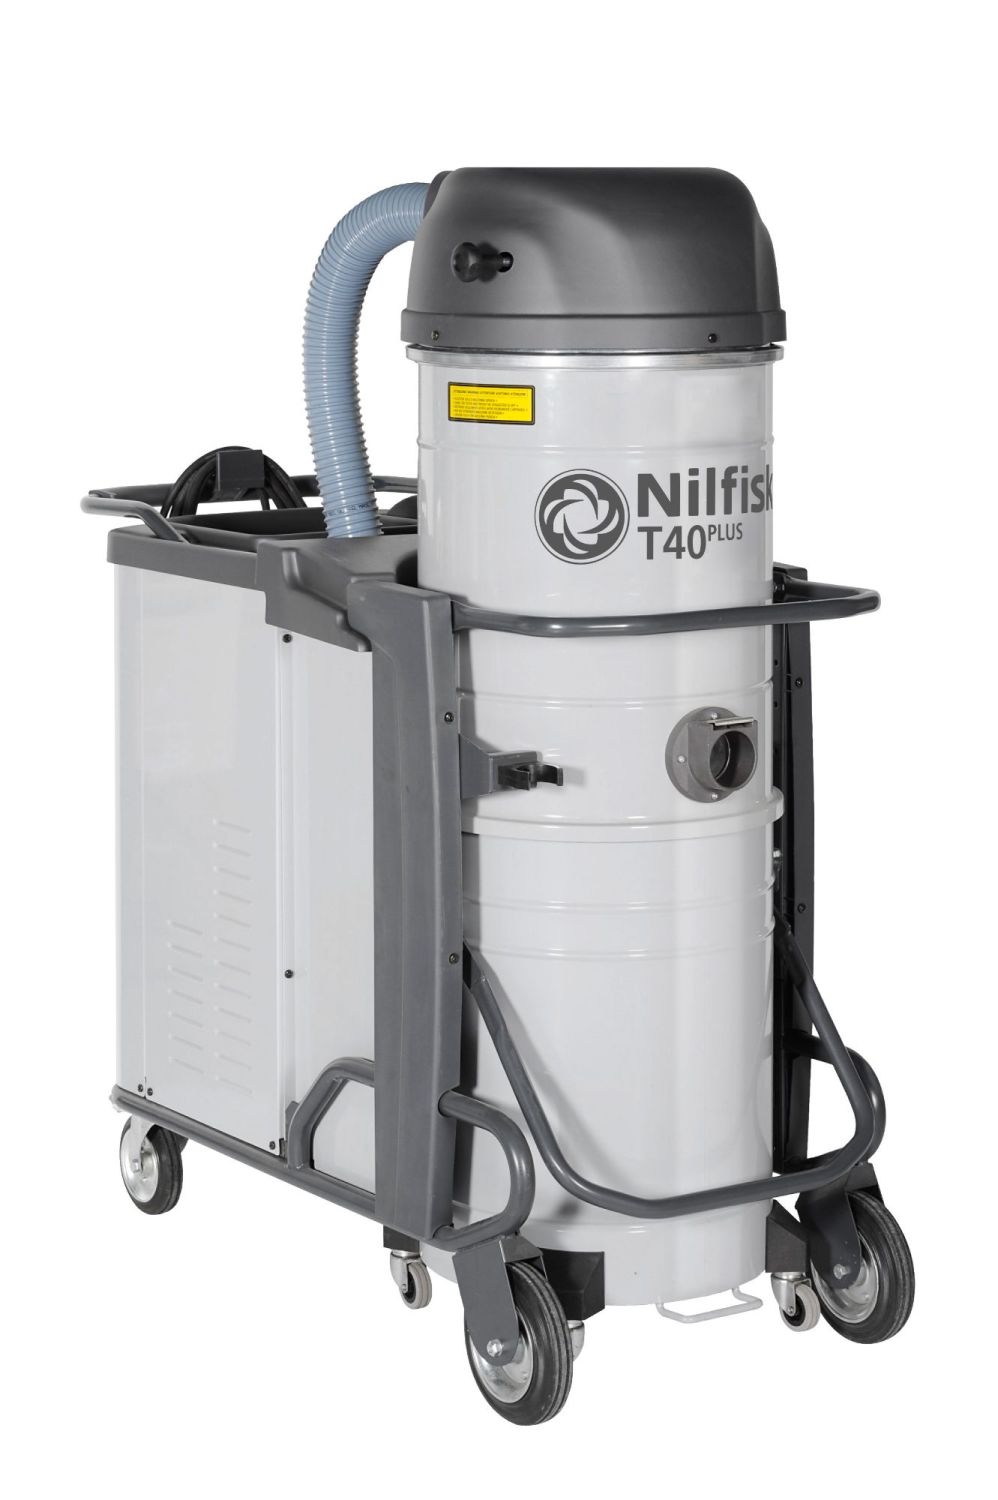 Nilfisk T40 Plus Industrial Vacuum